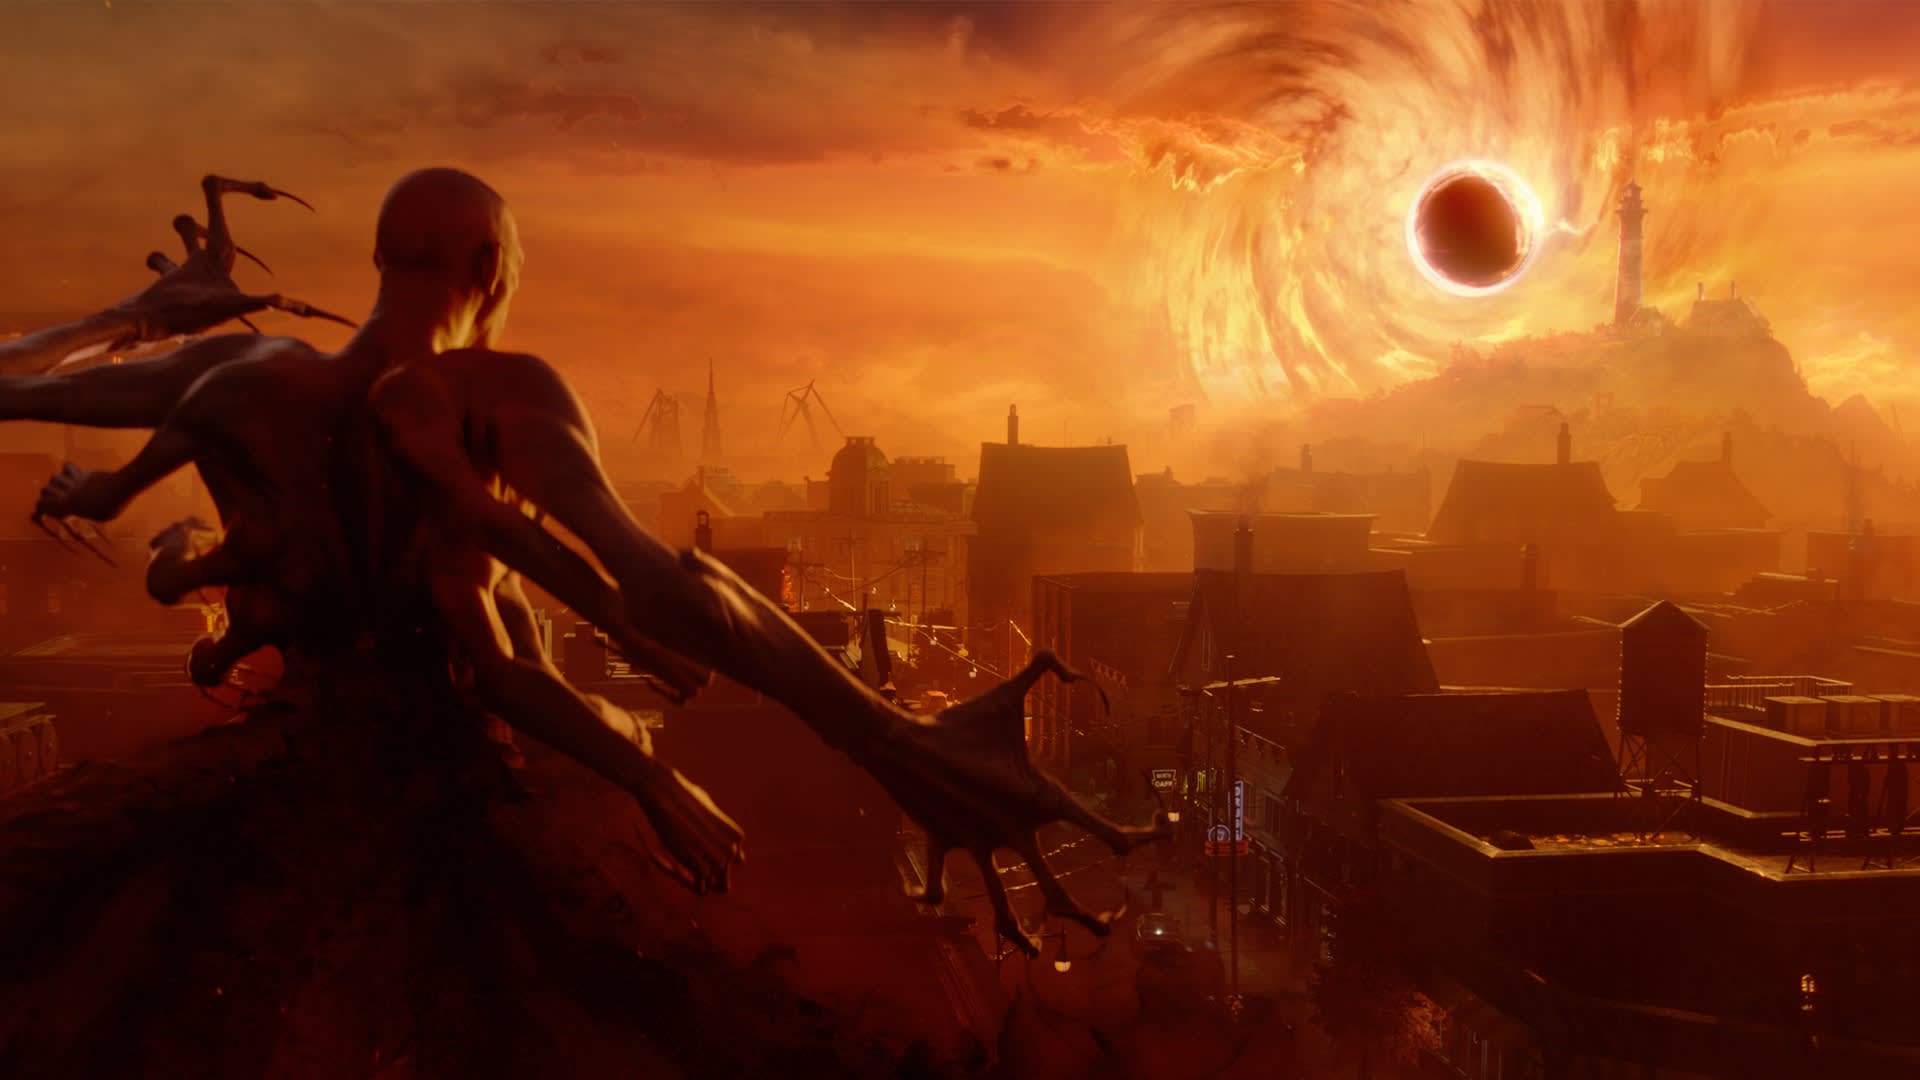 Redfall - Xbox & Bethesda Games Showcase 2021 - Official Announce Trailer